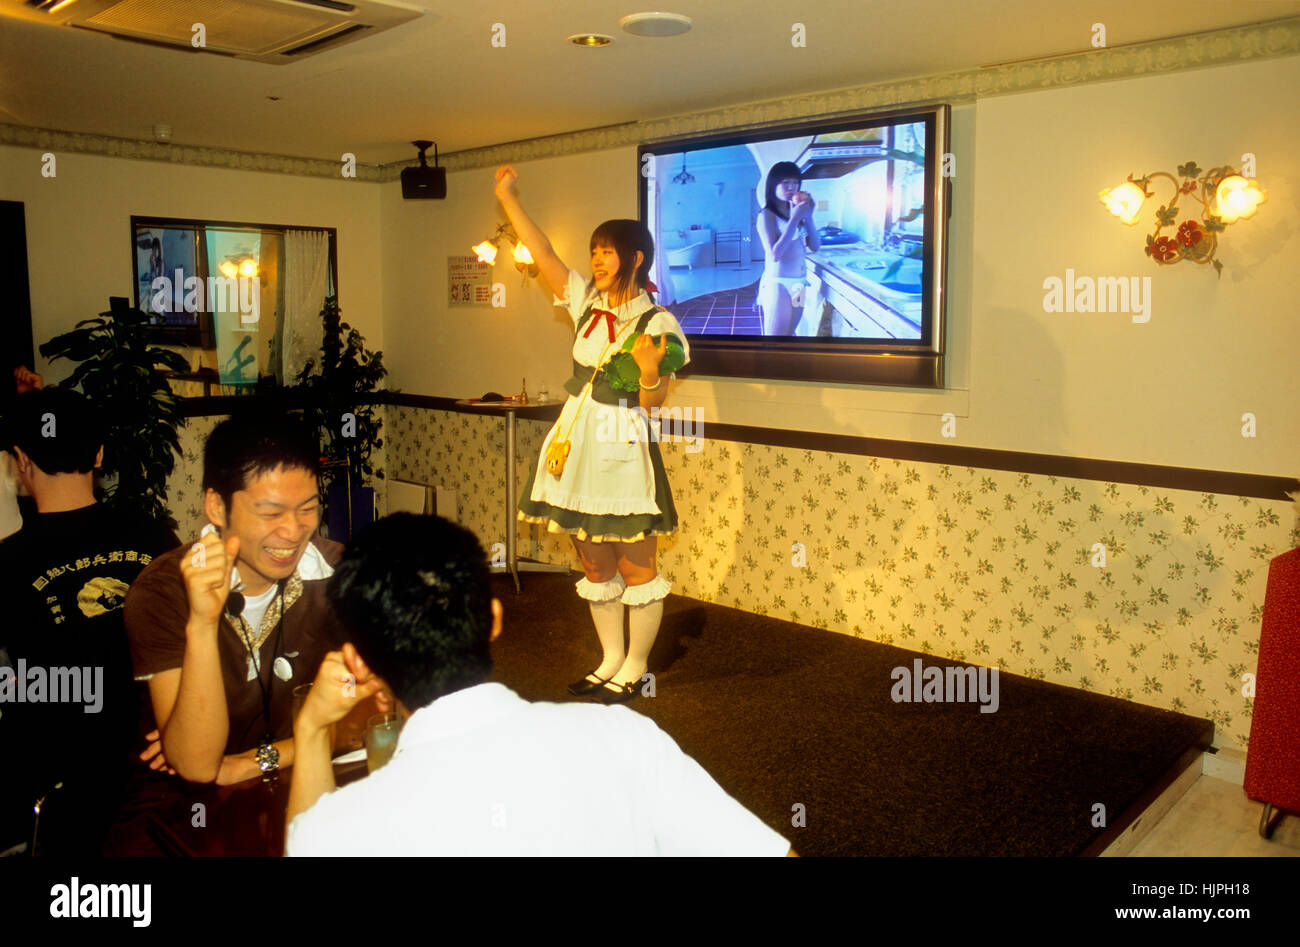 Akihabara. Amusement Cafe. 1-7-6. Cafe Otaku.Tokyo city, Japan, Asia Stock Photo